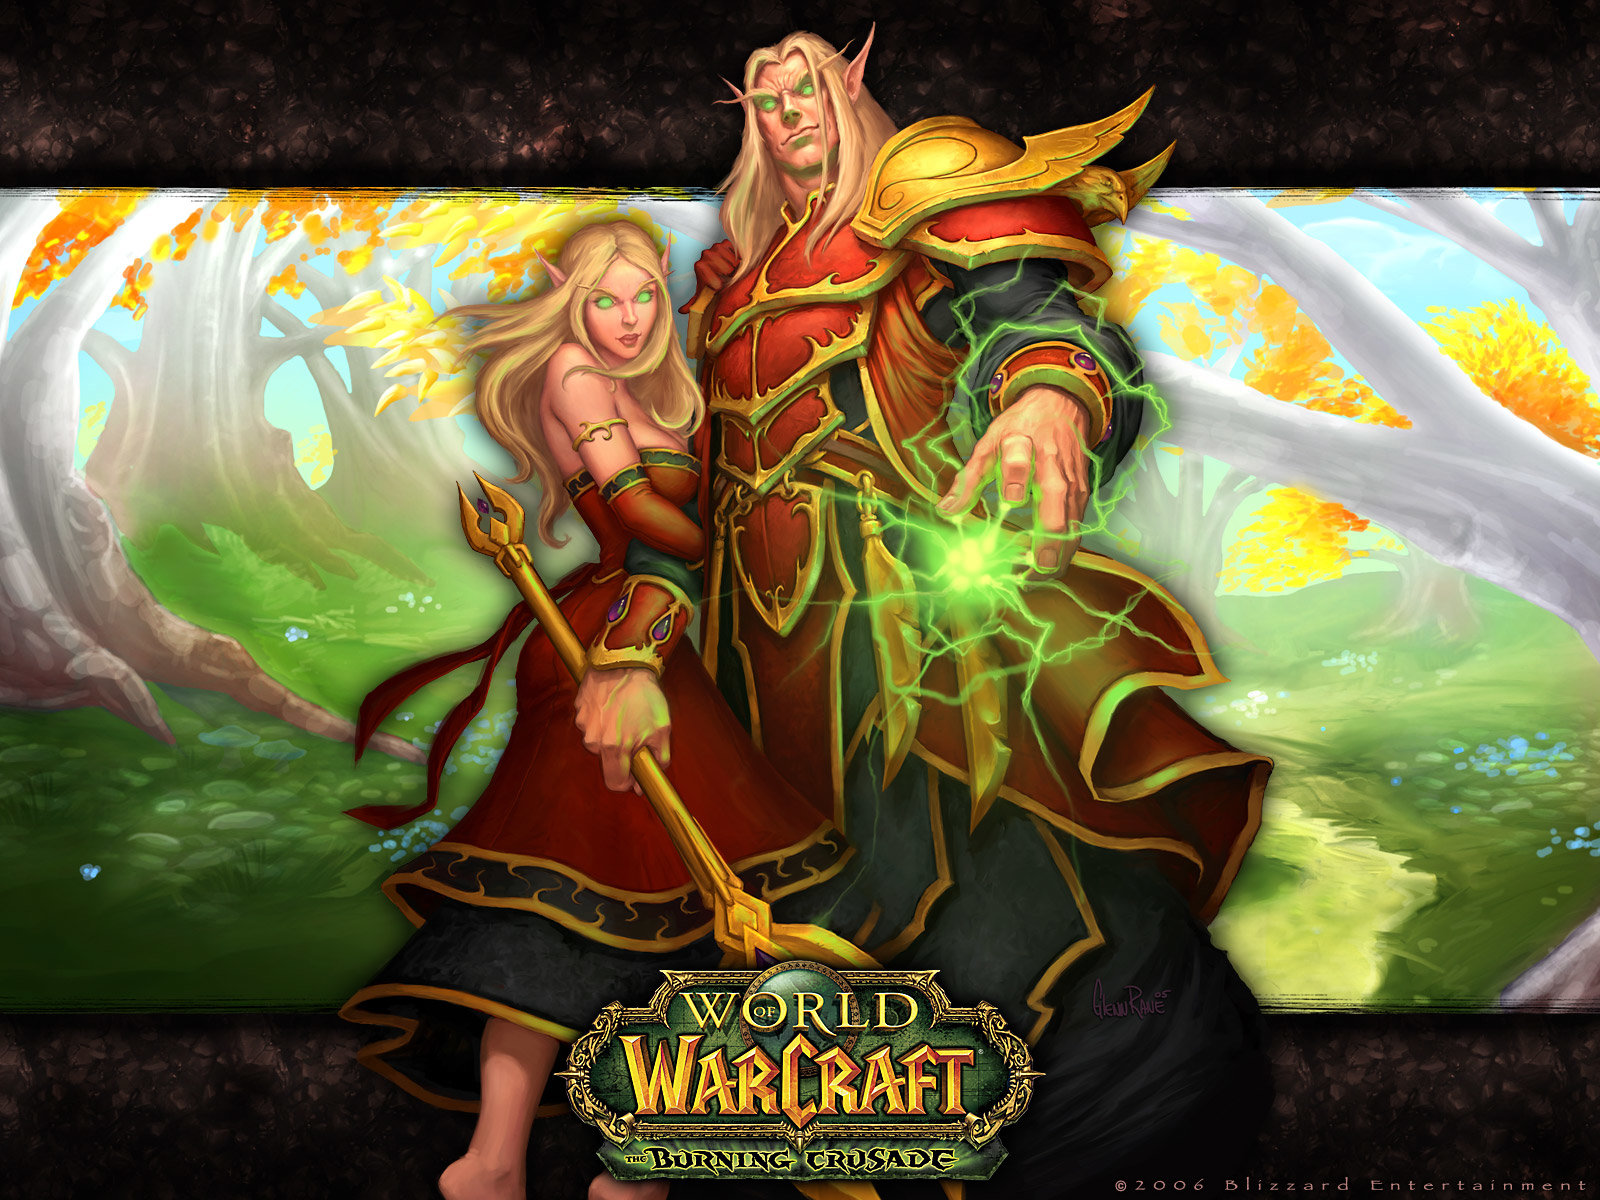 World Of Warcraft: The Burning Crusade wallpaper HD for desktop background